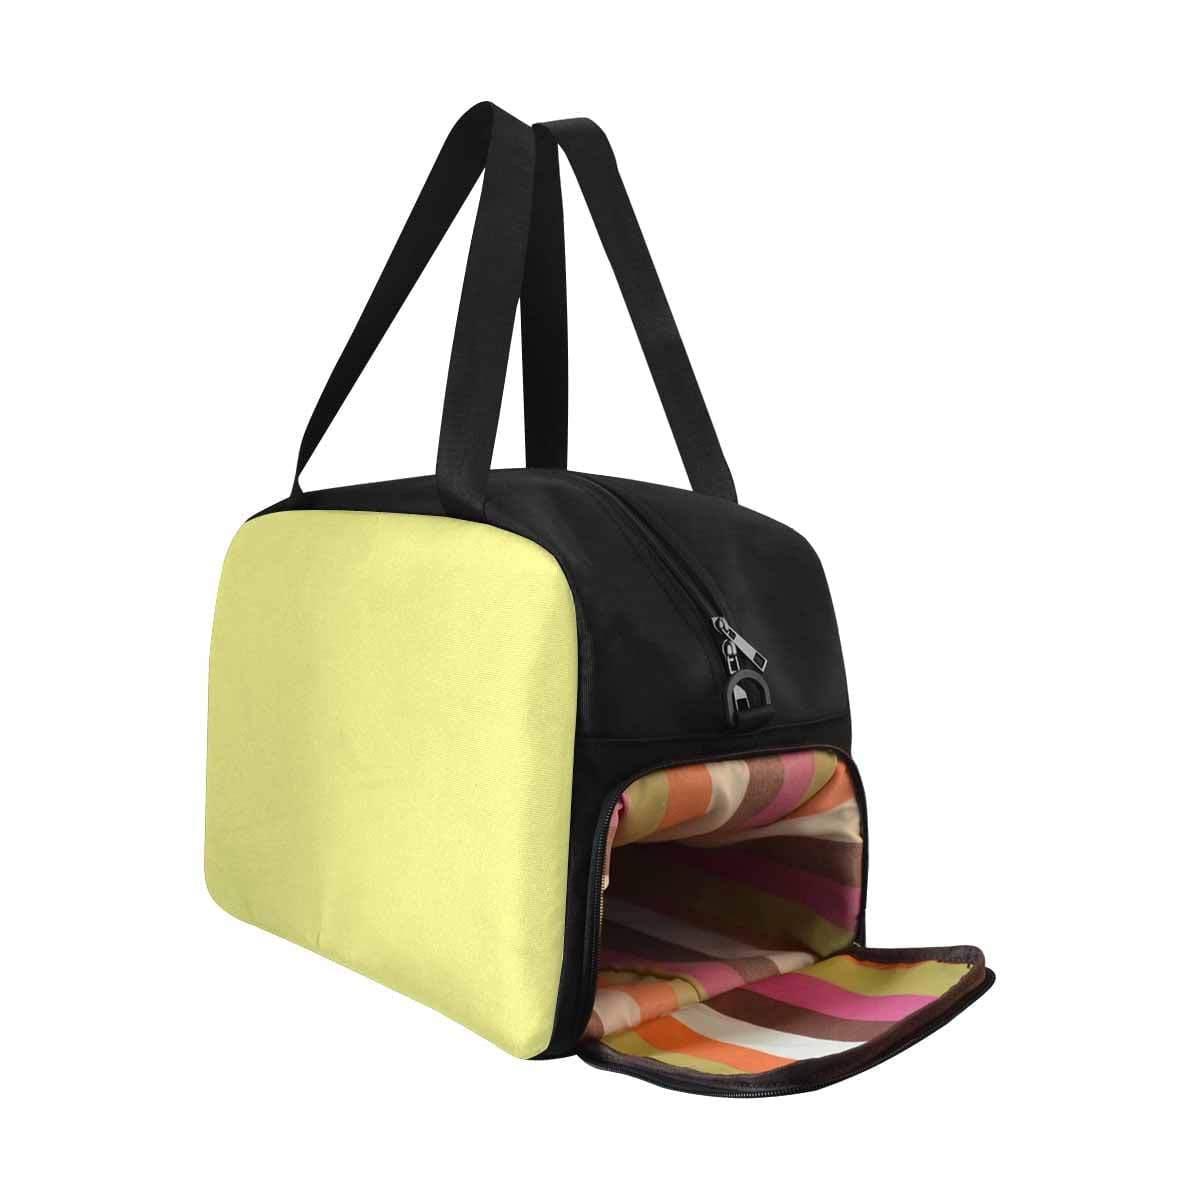 Pastel Yellow Tote And Crossbody Travel Bag - Bags | Travel Bags | Crossbody